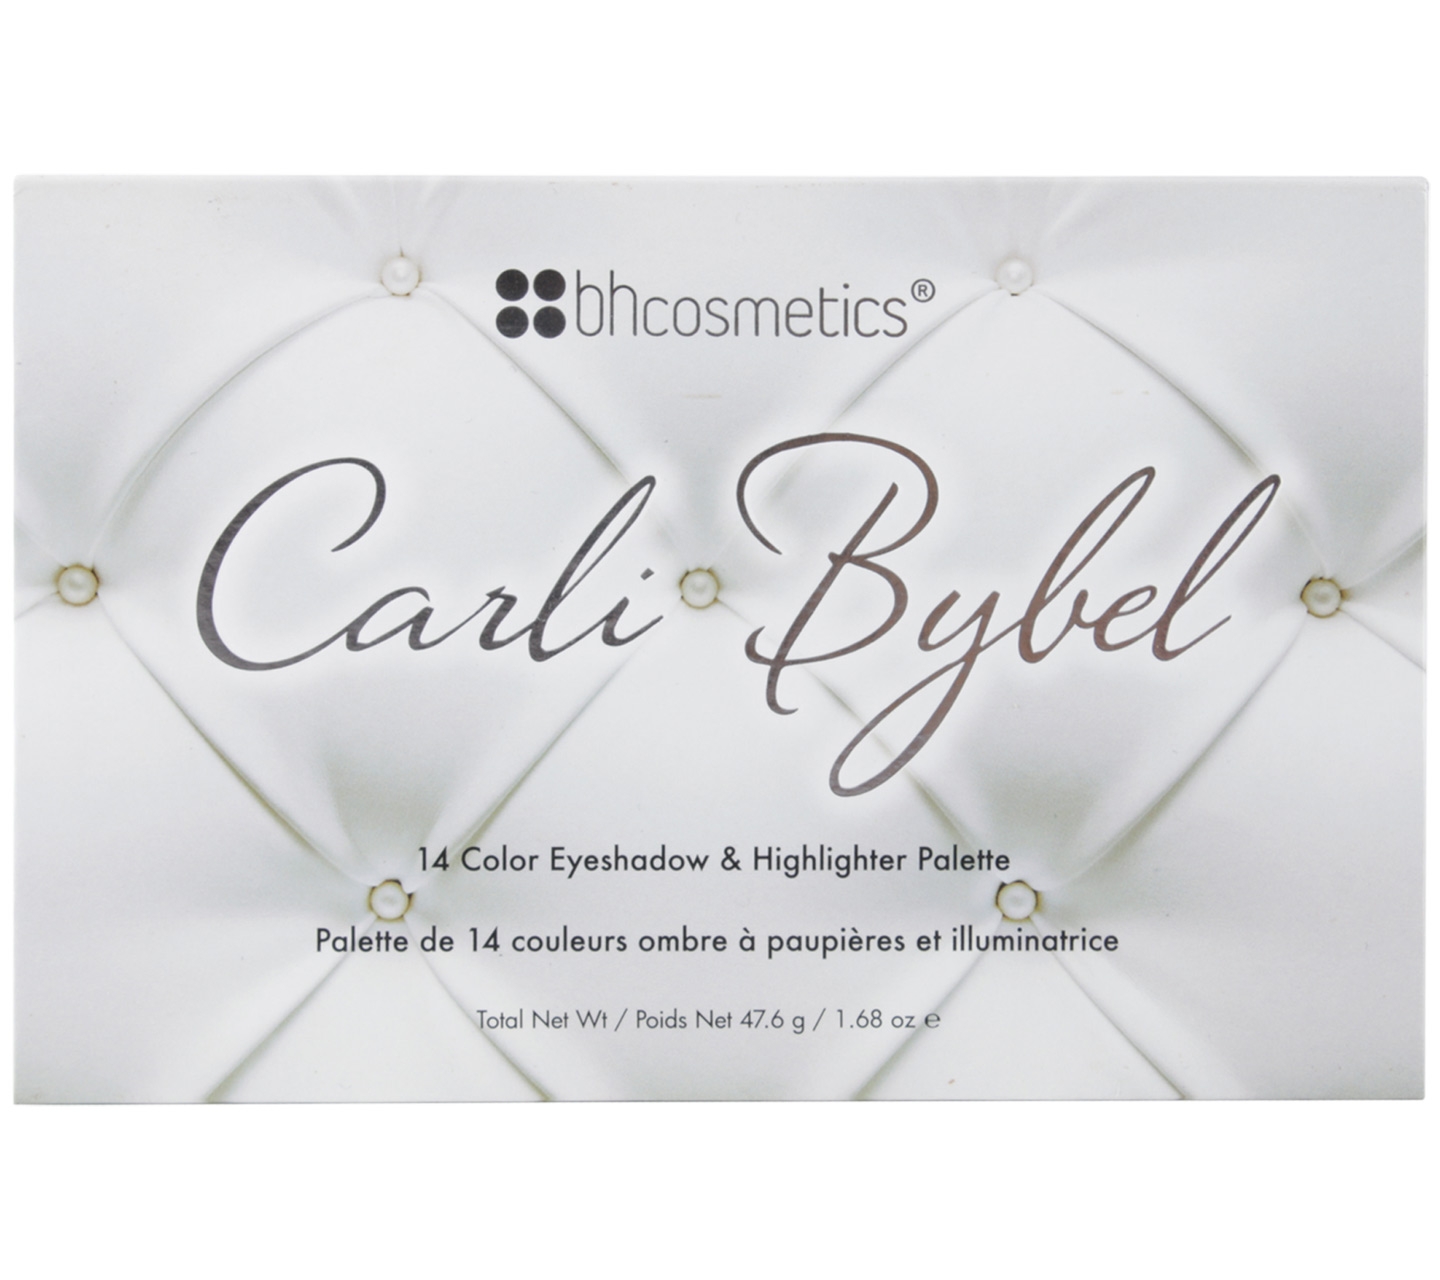 Bhcosmetics Carli Bybel Sets and Palette